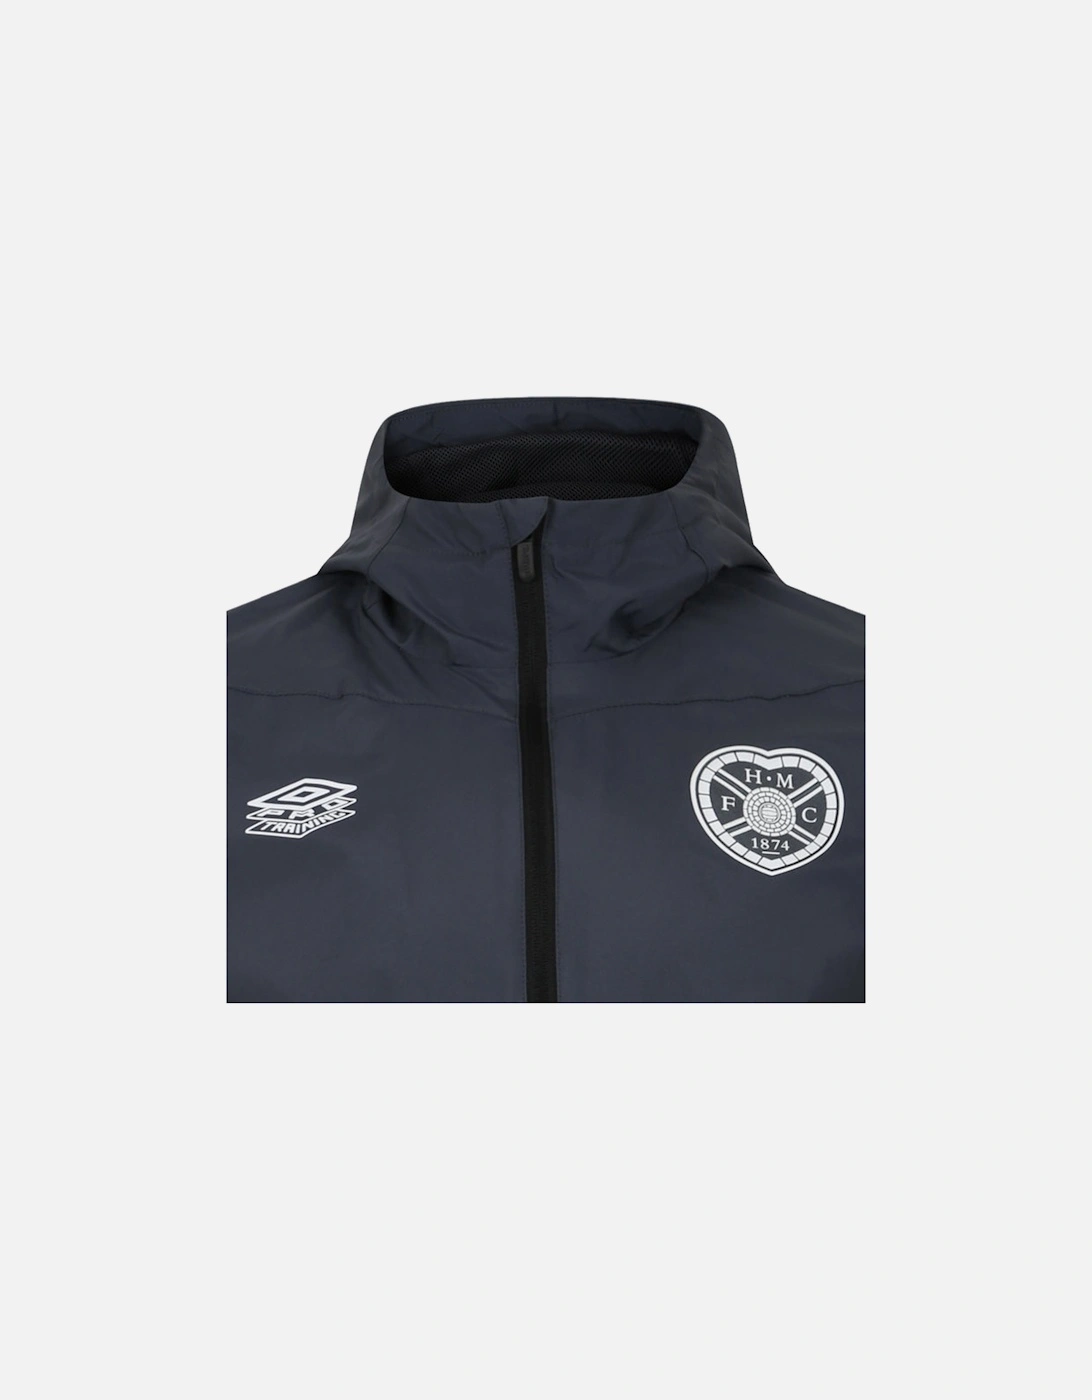 Mens 23/24 Heart Of Midlothian FC Showerproof Jacket